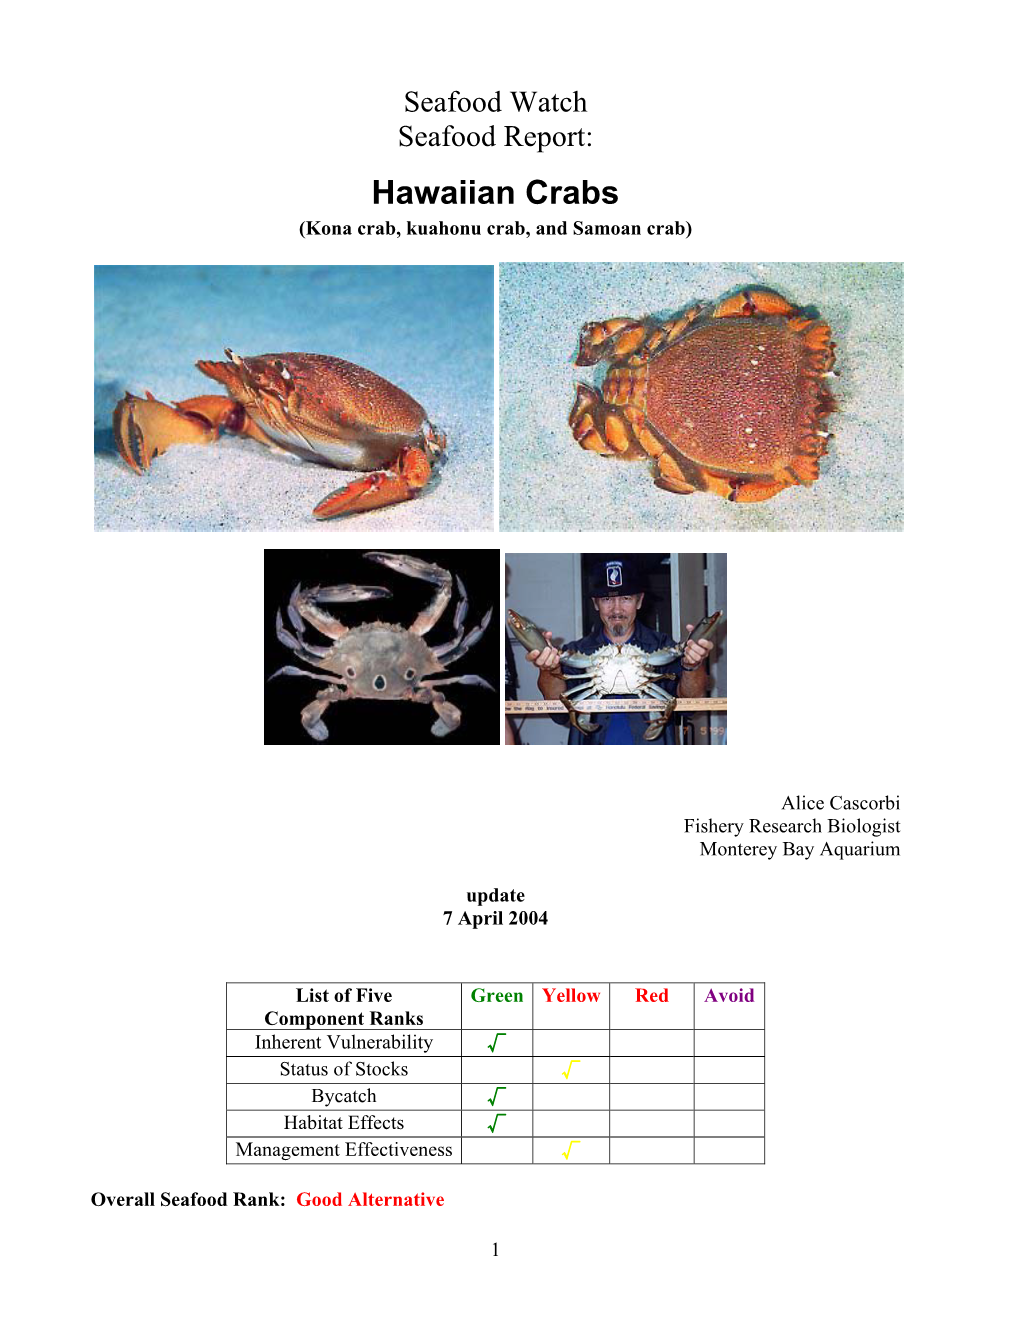 Seafood Watch Seafood Report: Hawaiian Crabs (Kona Crab, Kuahonu Crab, and Samoan Crab)